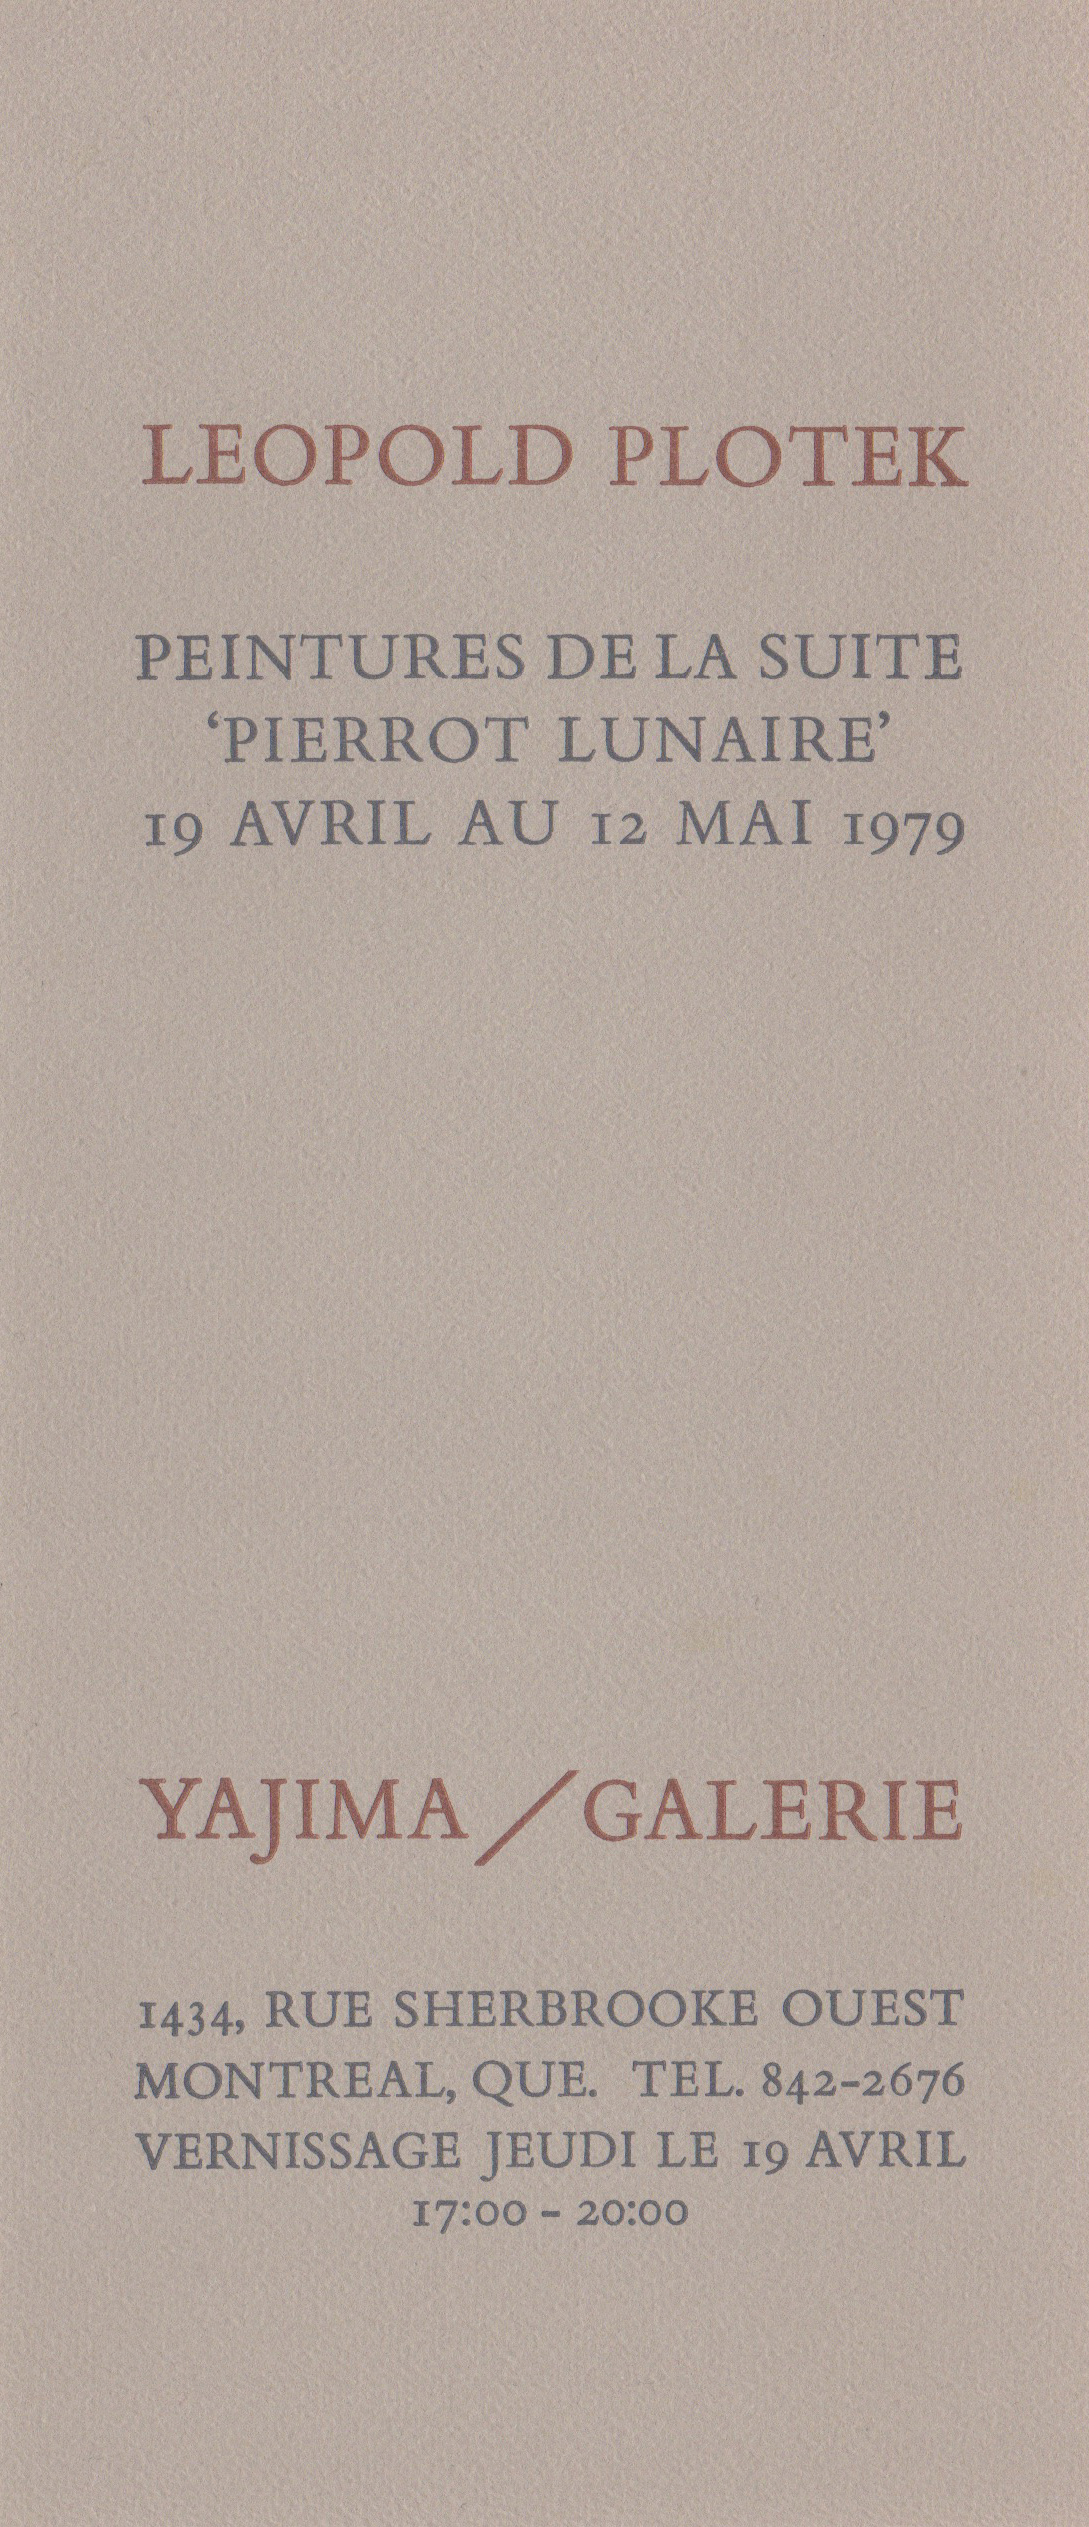 Yajima/Galerie, Montreal, Canada, 1979 (solo)